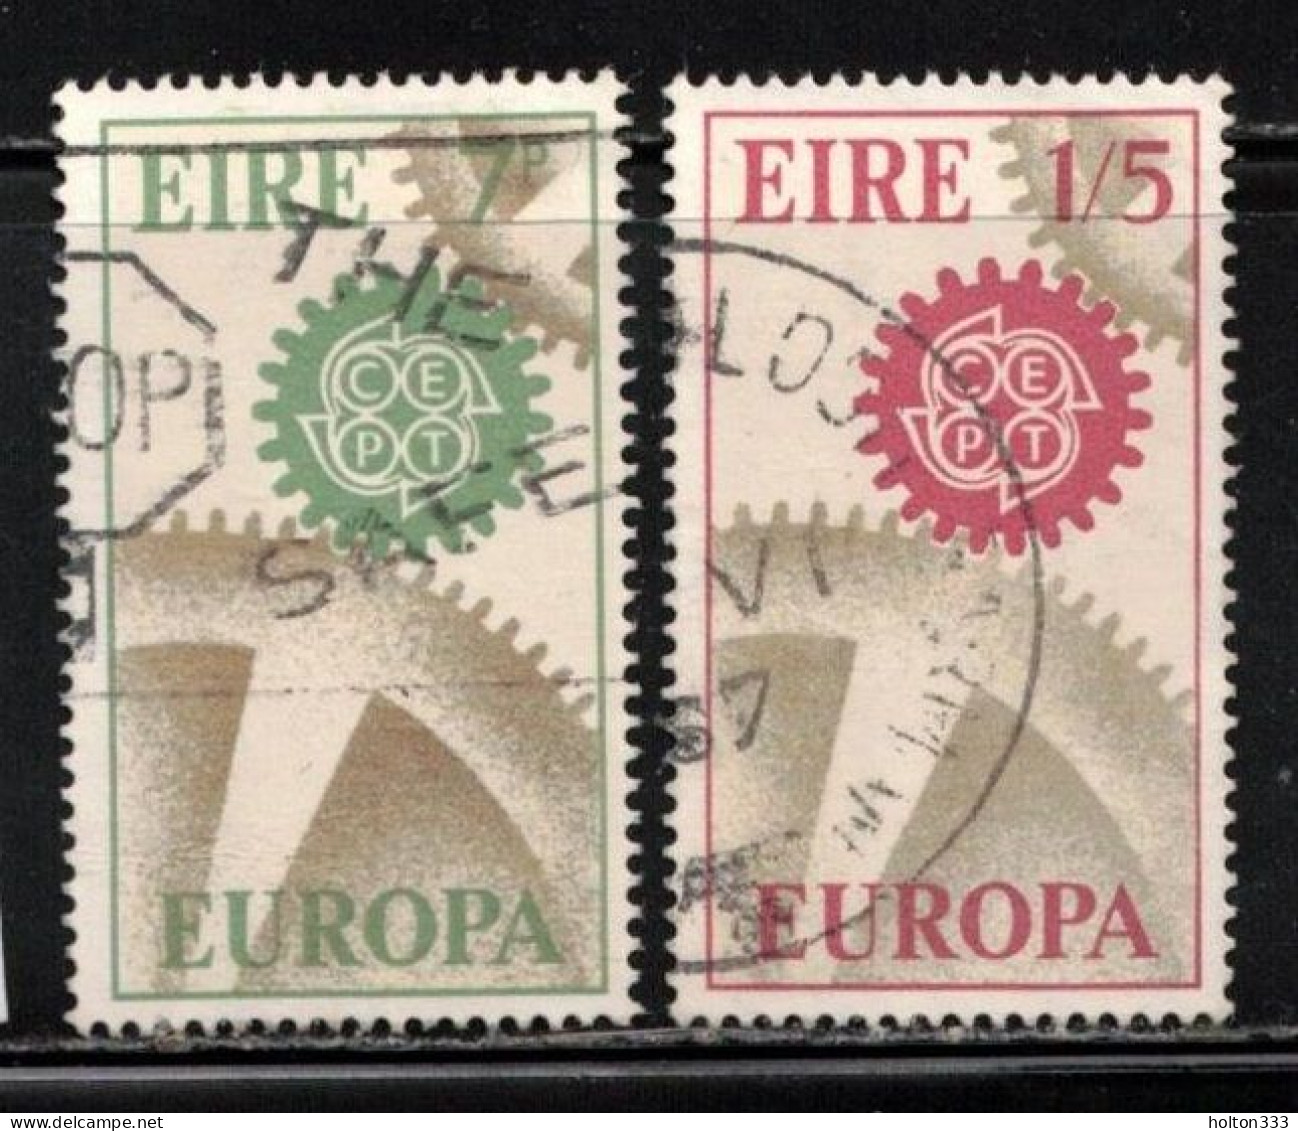 IRELAND Scott # 232-3 Used - 1967 Europa Issue B - Neufs